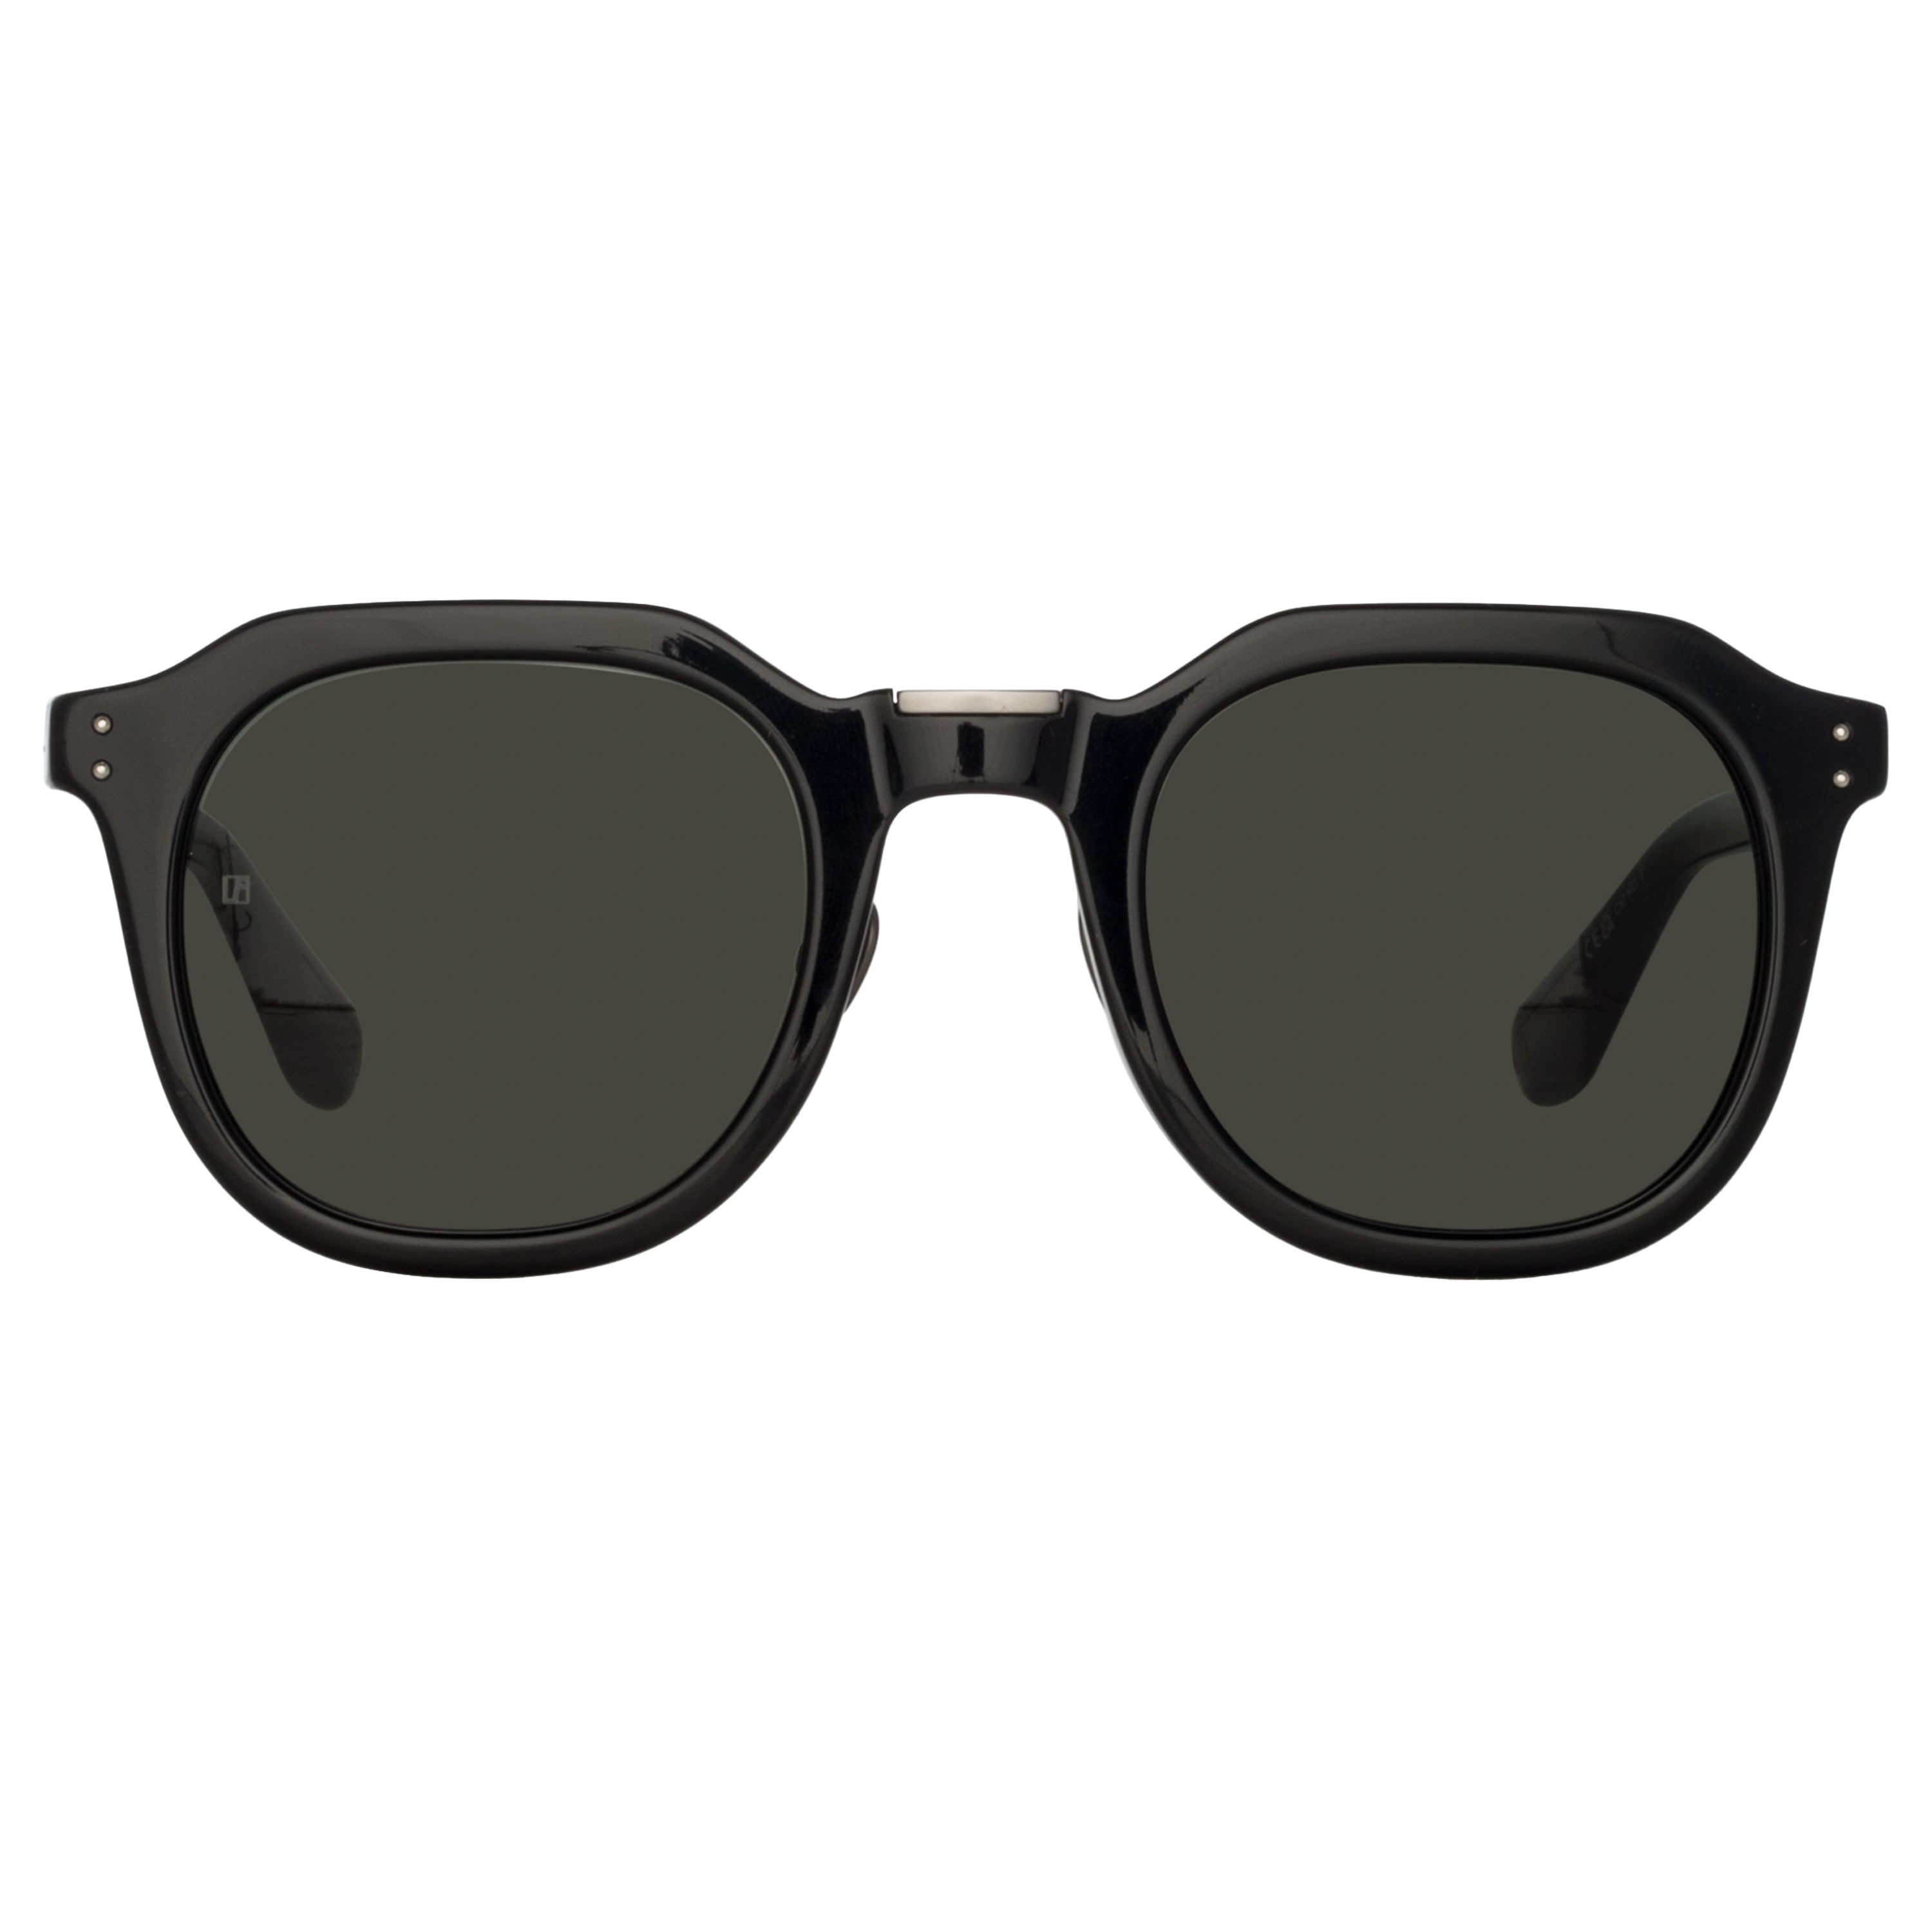 Fletcher Angular Sunglasses in Black and Grey